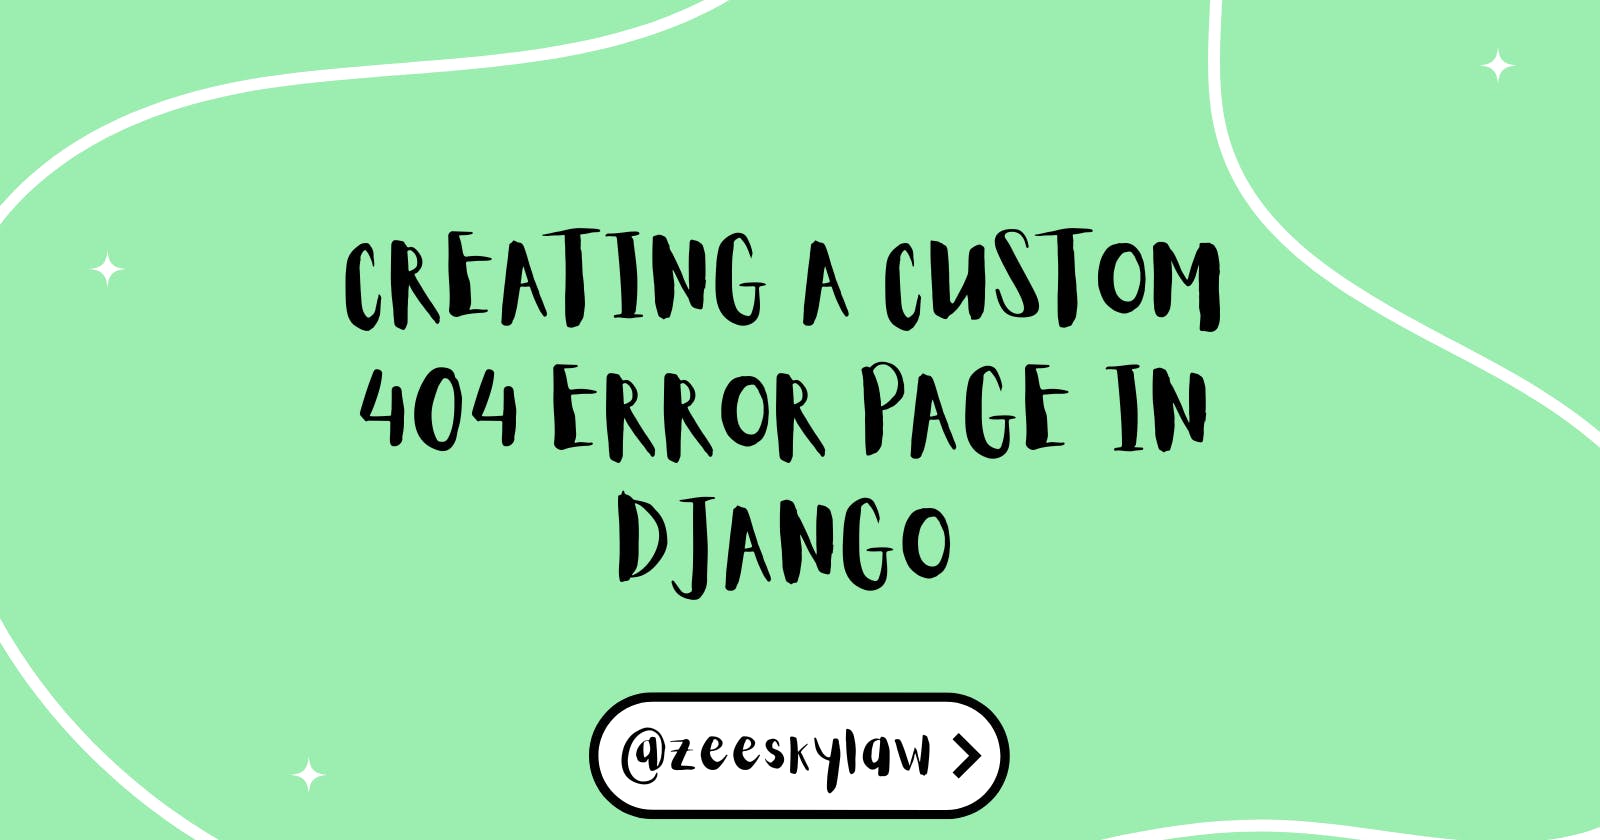 Django: Creating a custom 404 Error Page